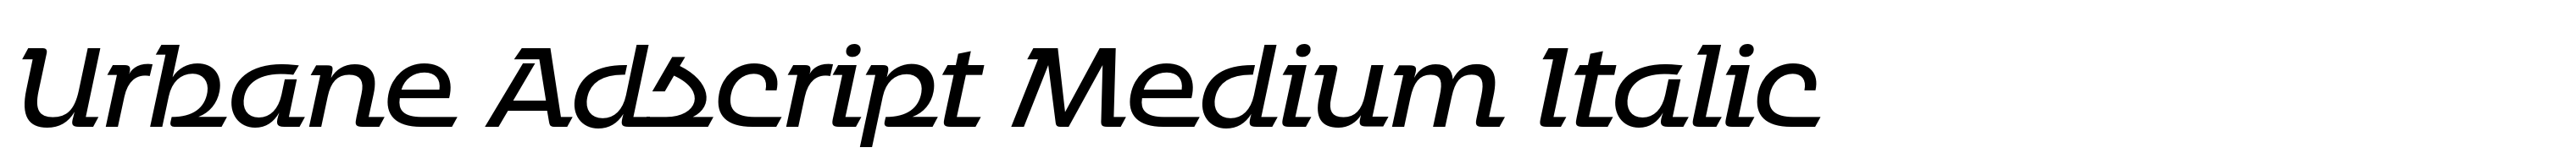 Urbane Adscript Medium Italic